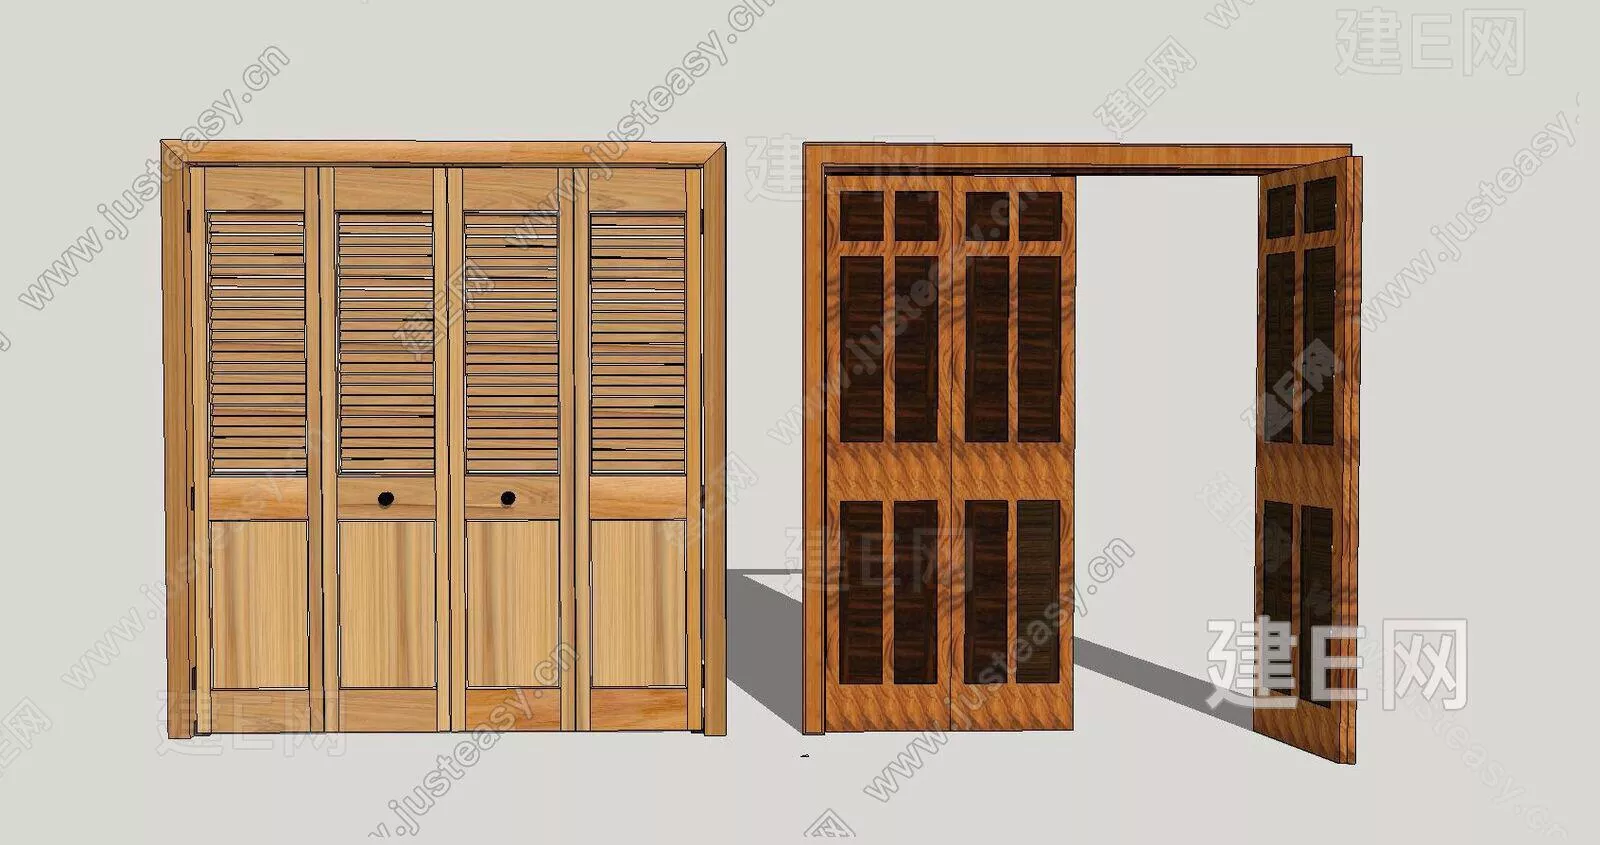 JAPANESE DOOR AND WINDOWS - SKETCHUP 3D MODEL - ENSCAPE - 105726093